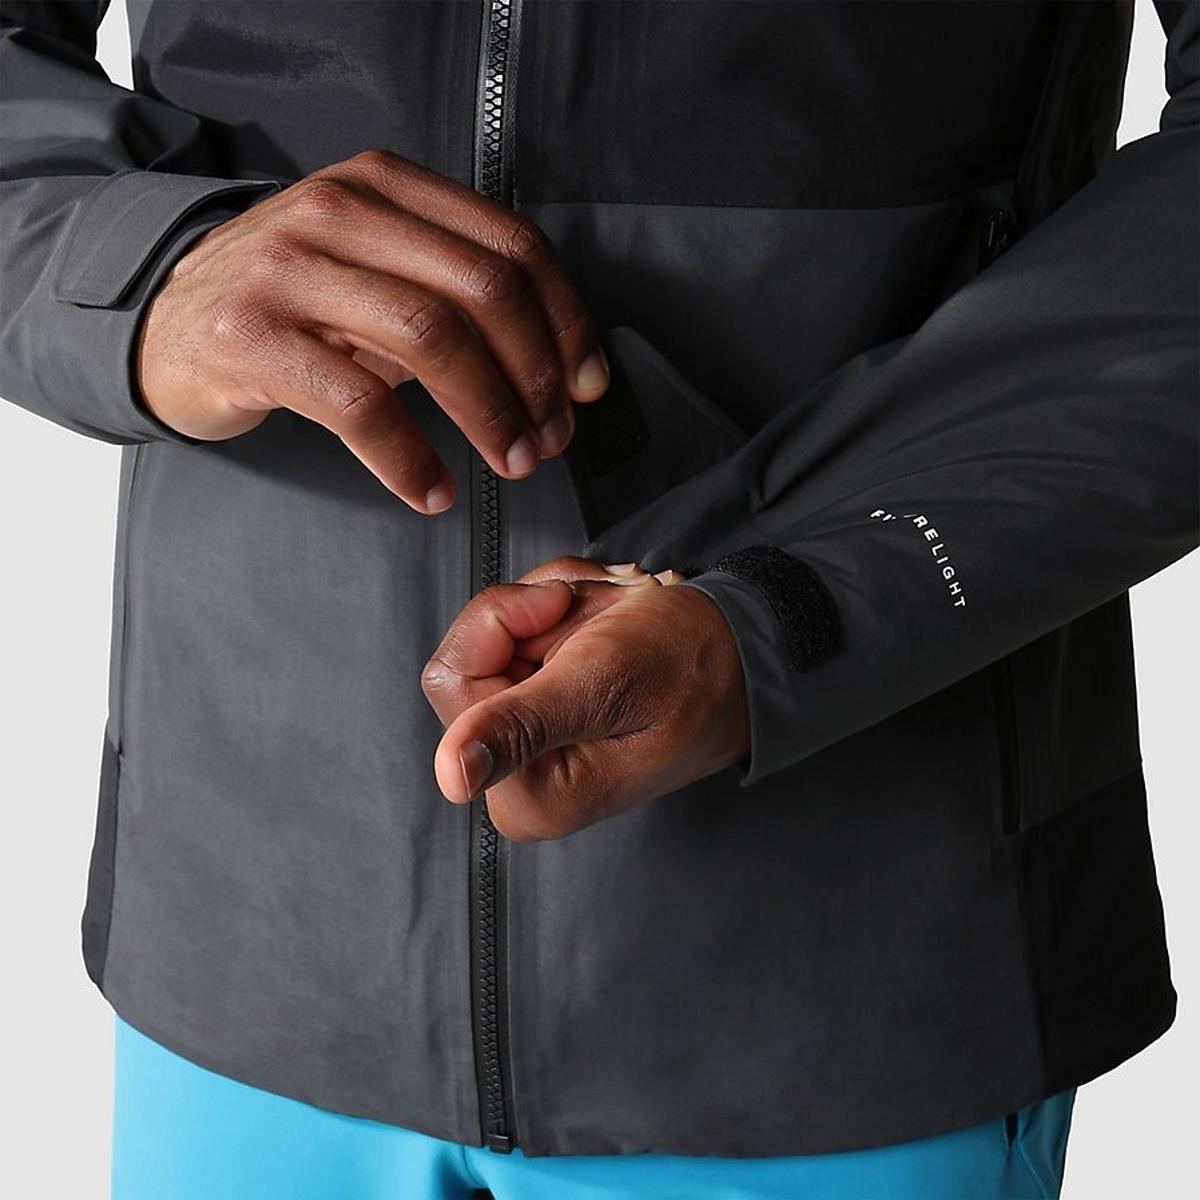 The North Face Men's Jazzi Futurelight Jacket - Asphalt Grey/Black